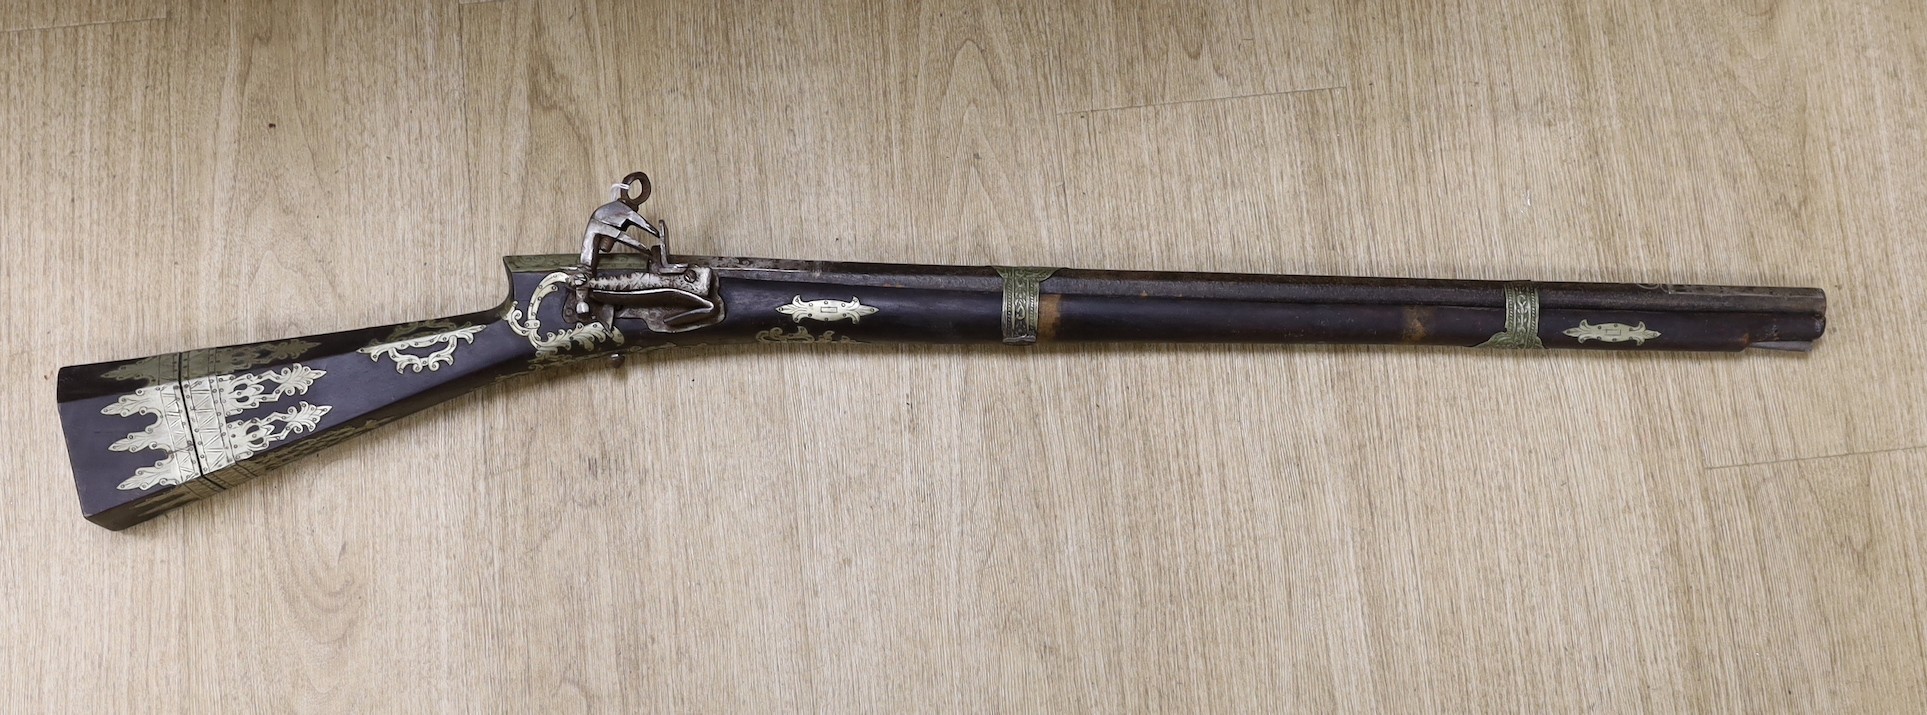 An Eastern antique flintlock musket                                                                                                                                                                                         